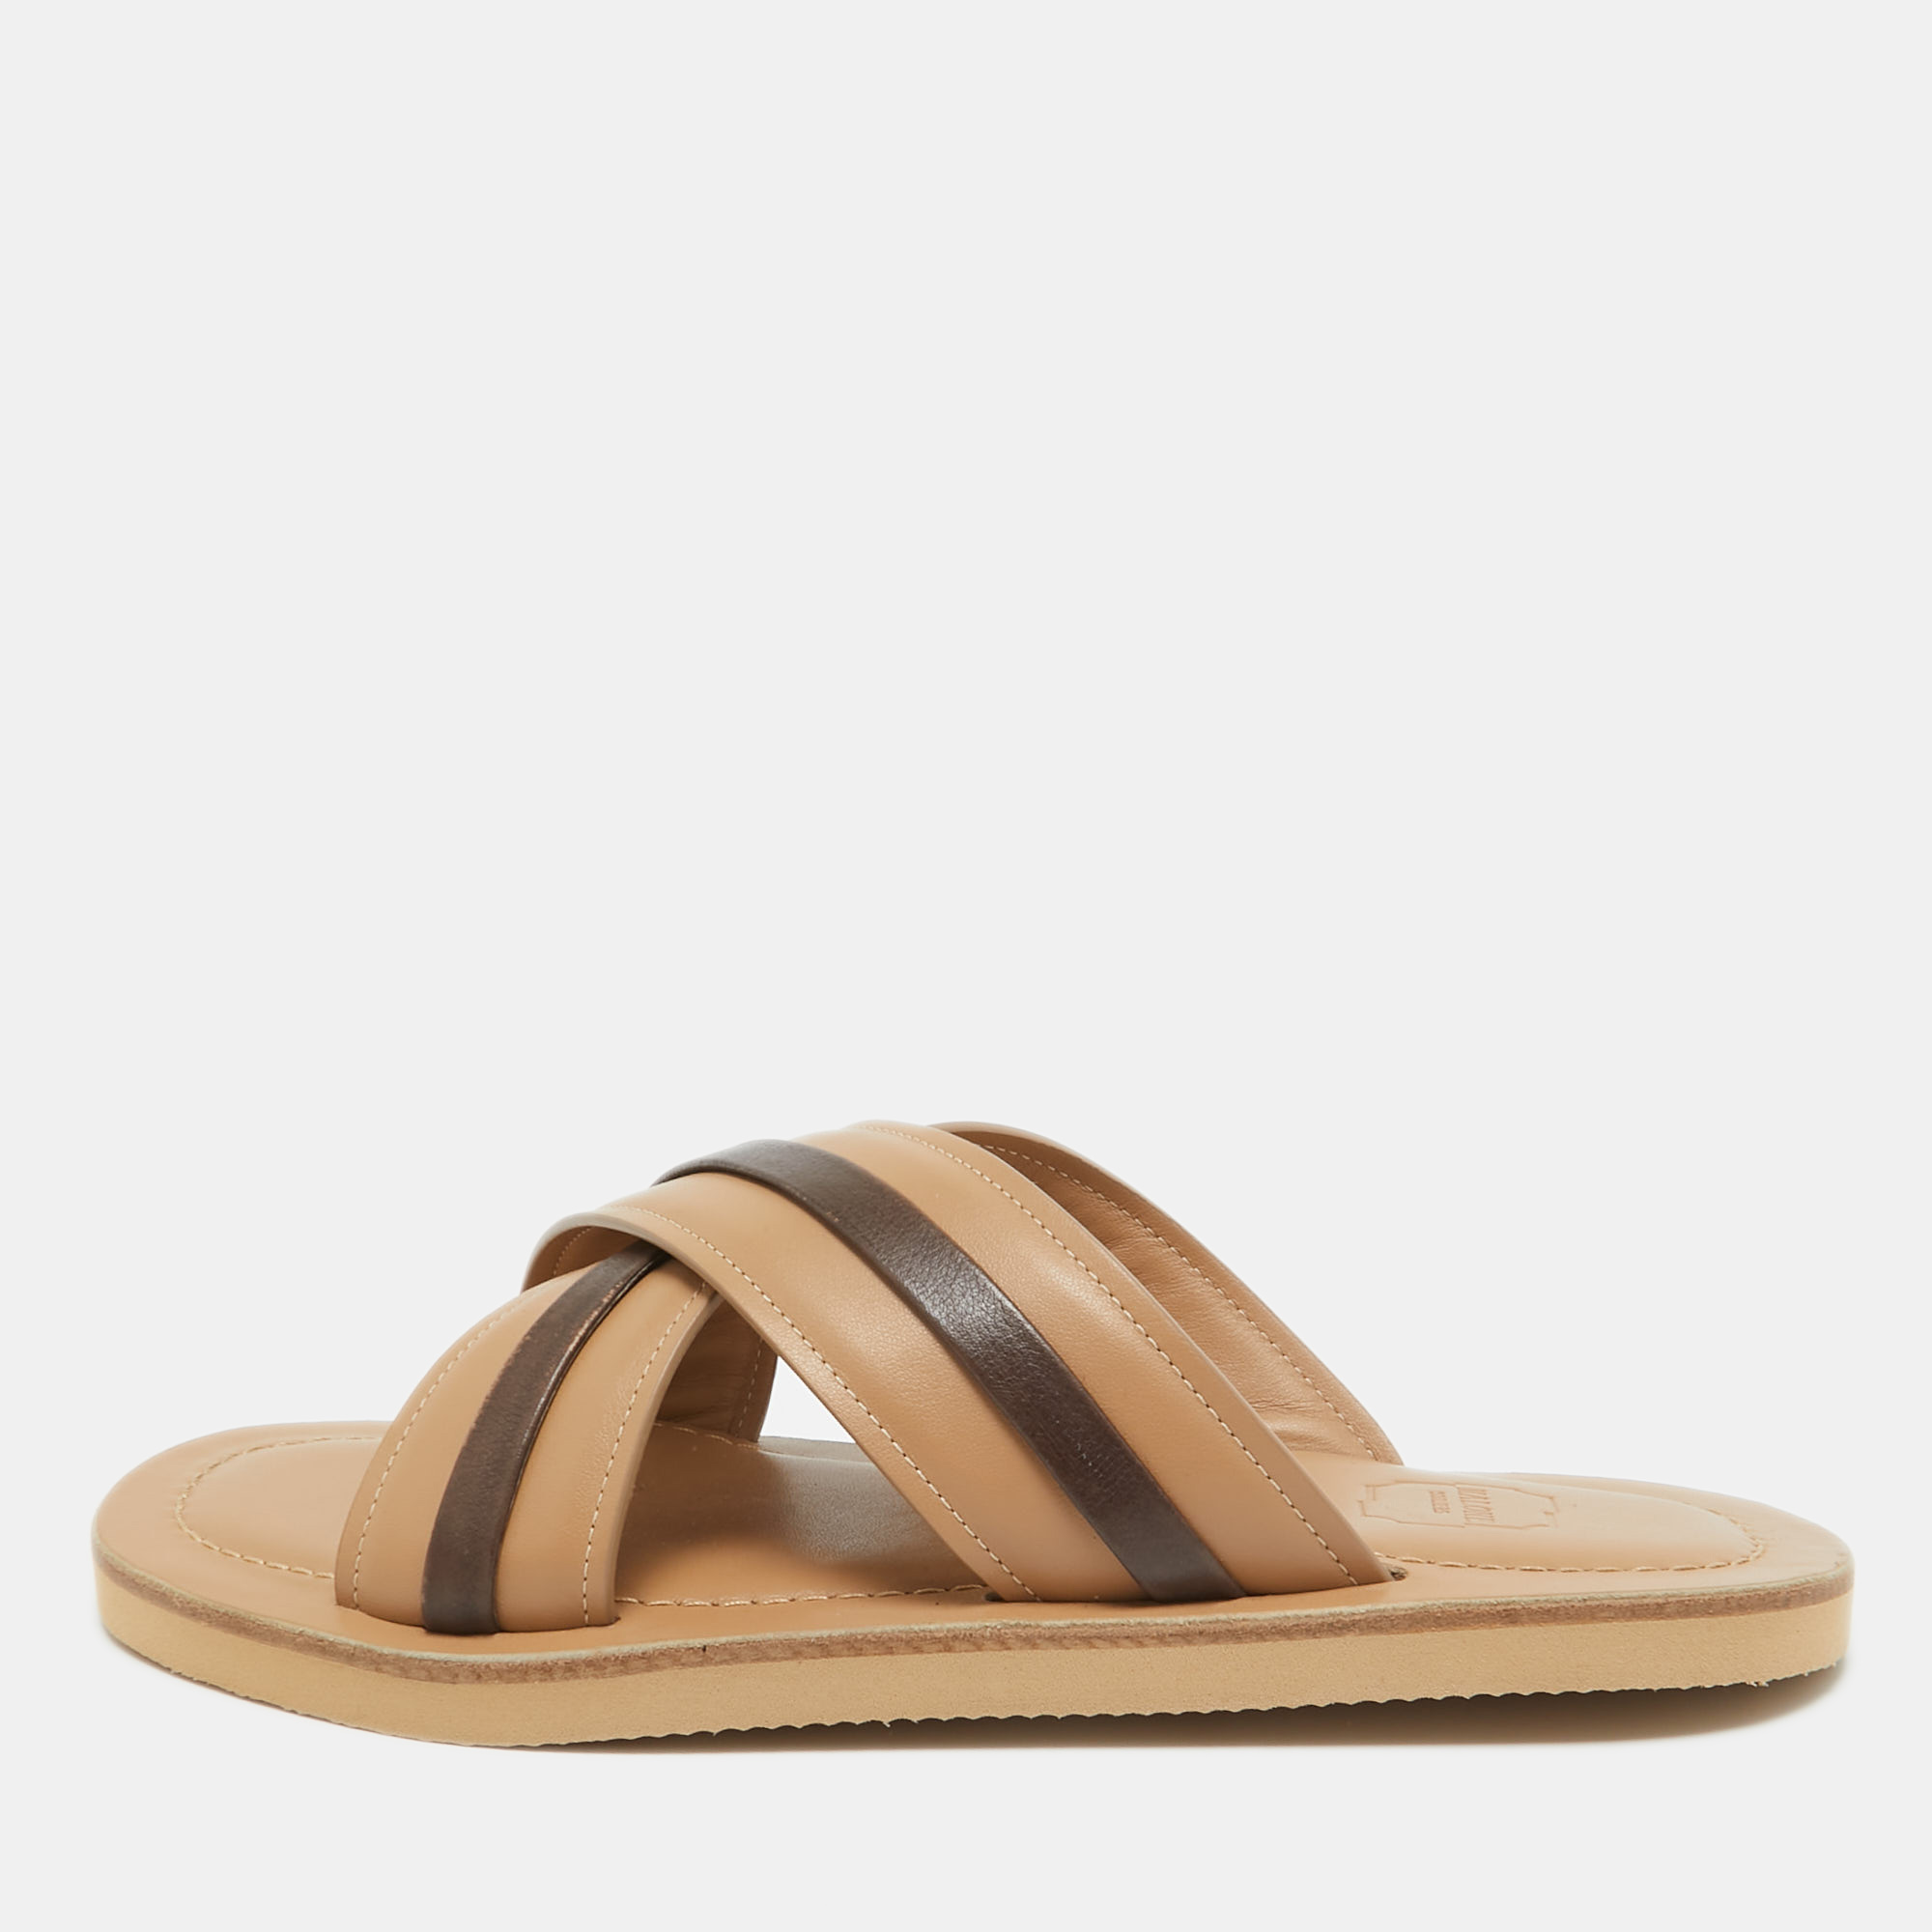 Malone souliers beige/brown leather gabriel sandals size 40